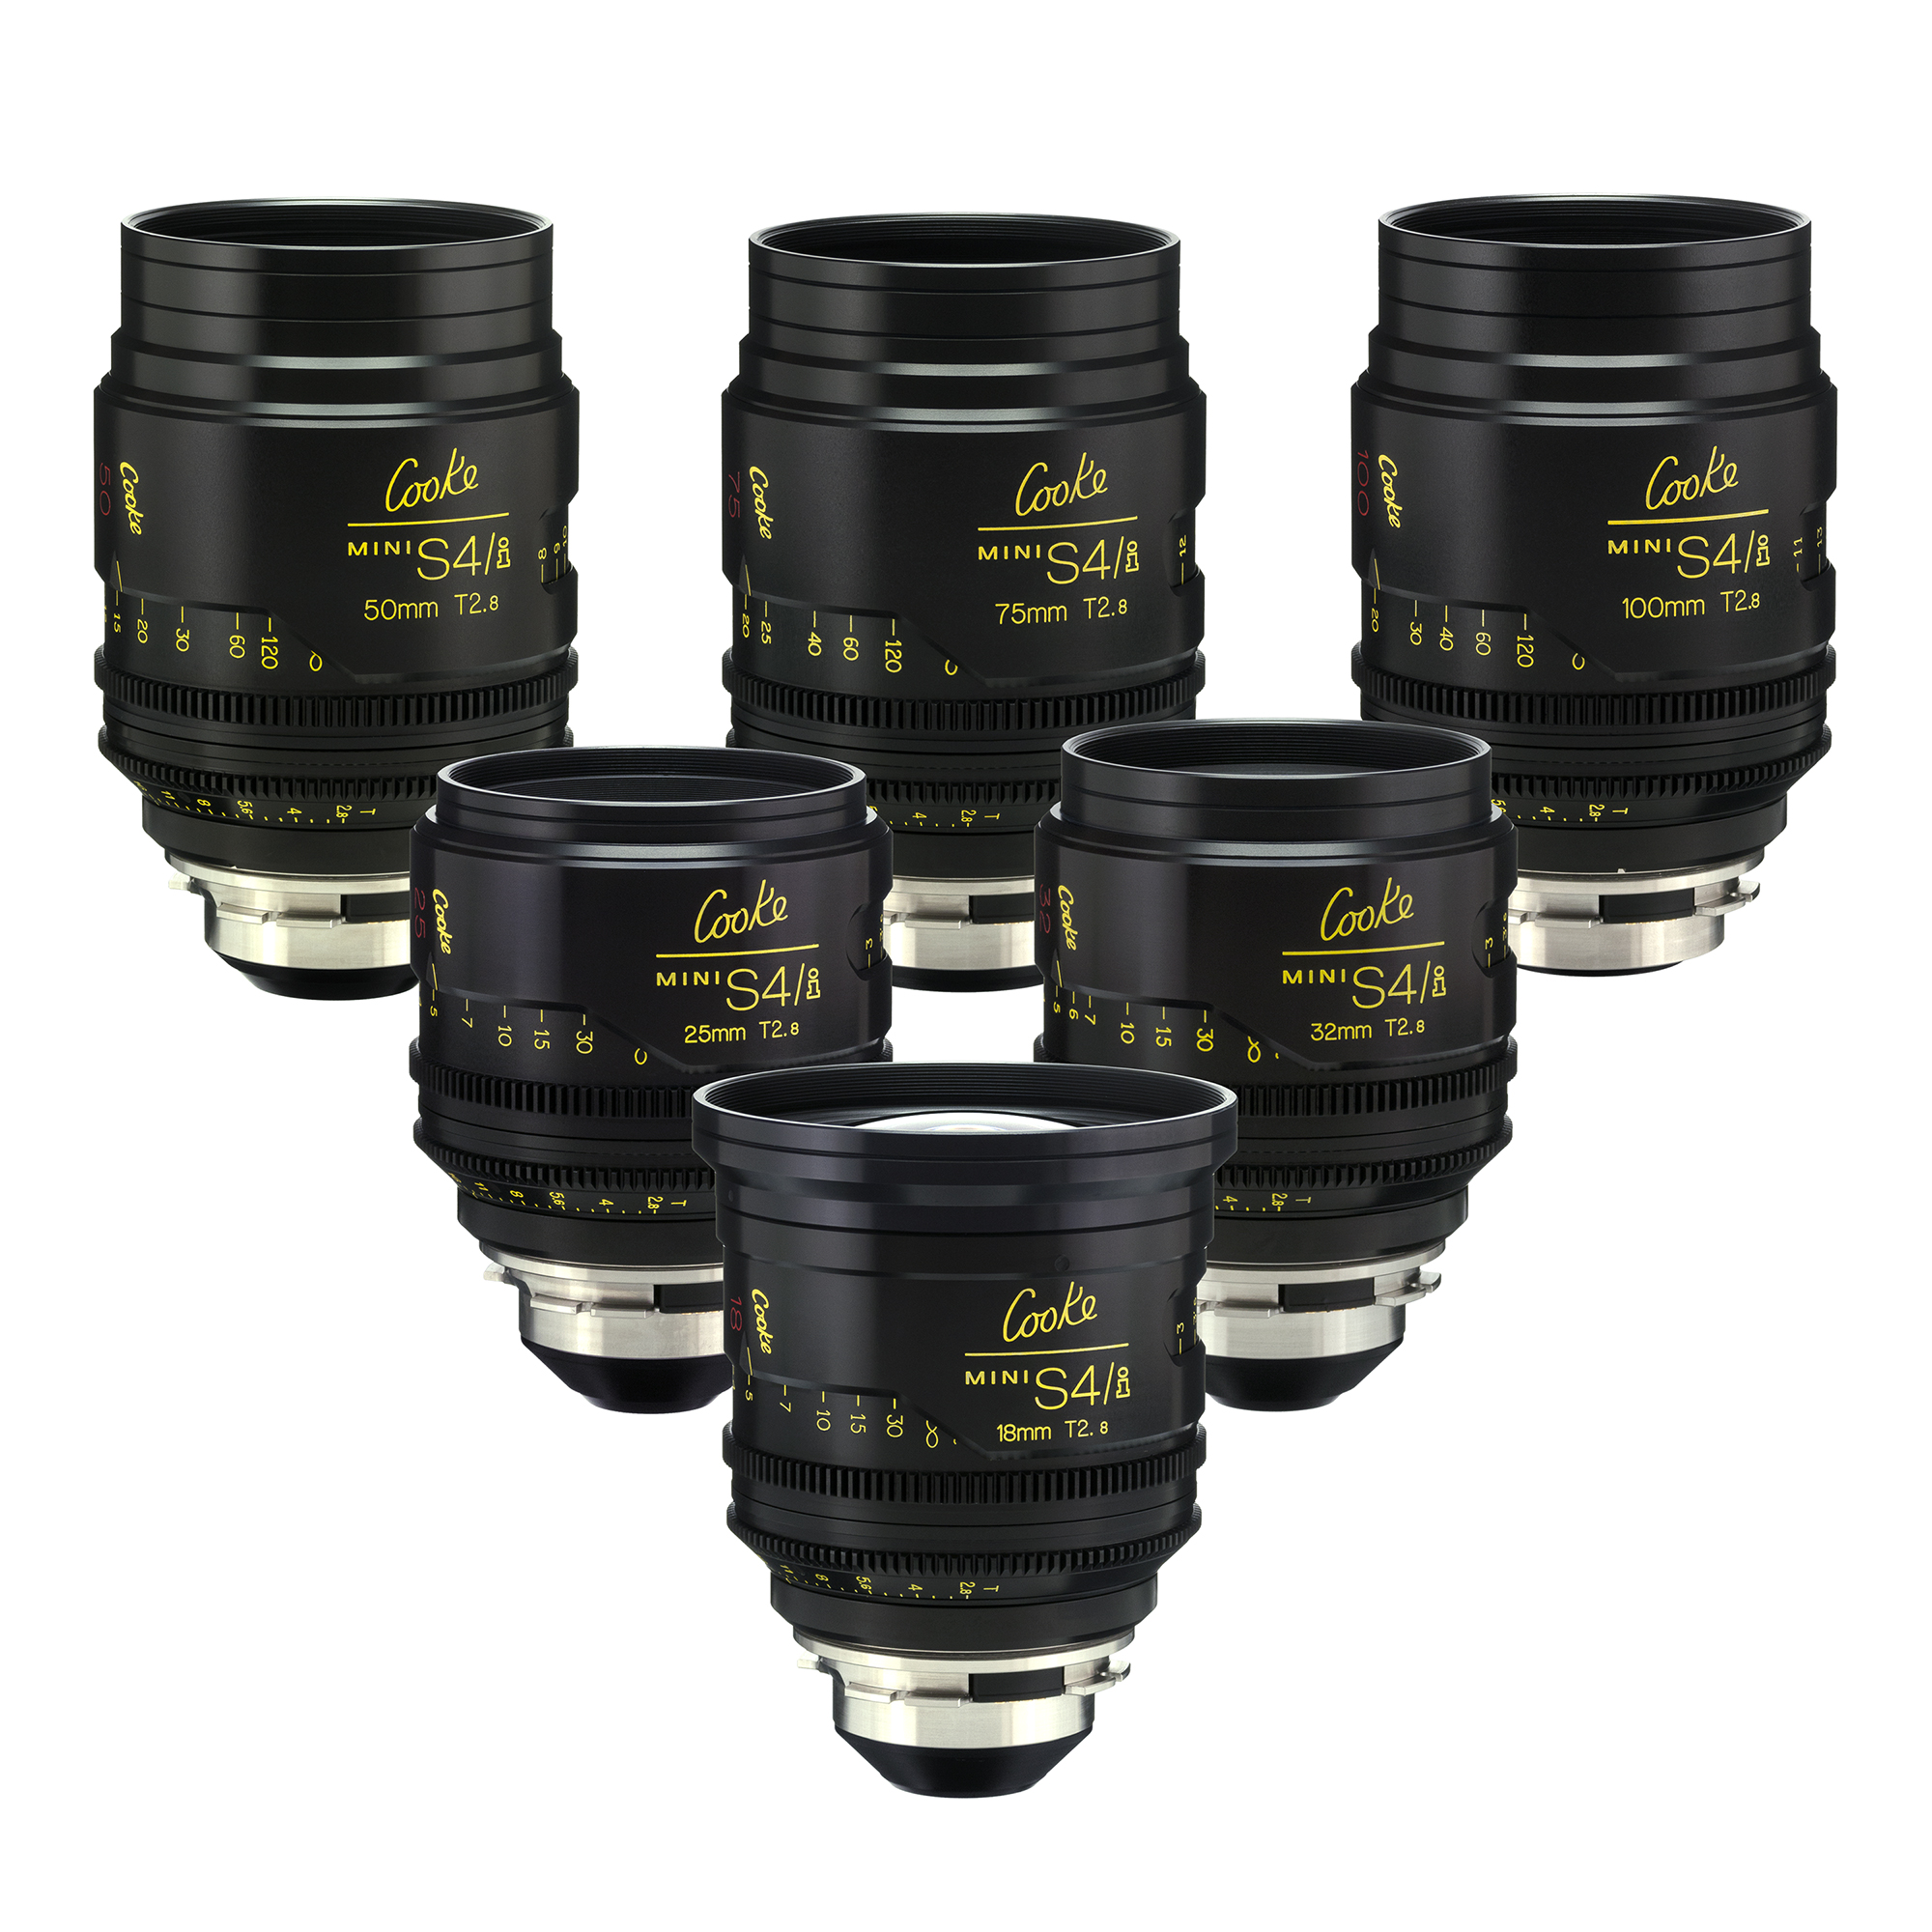 Cooke MiniS4/i S35 Lens Series